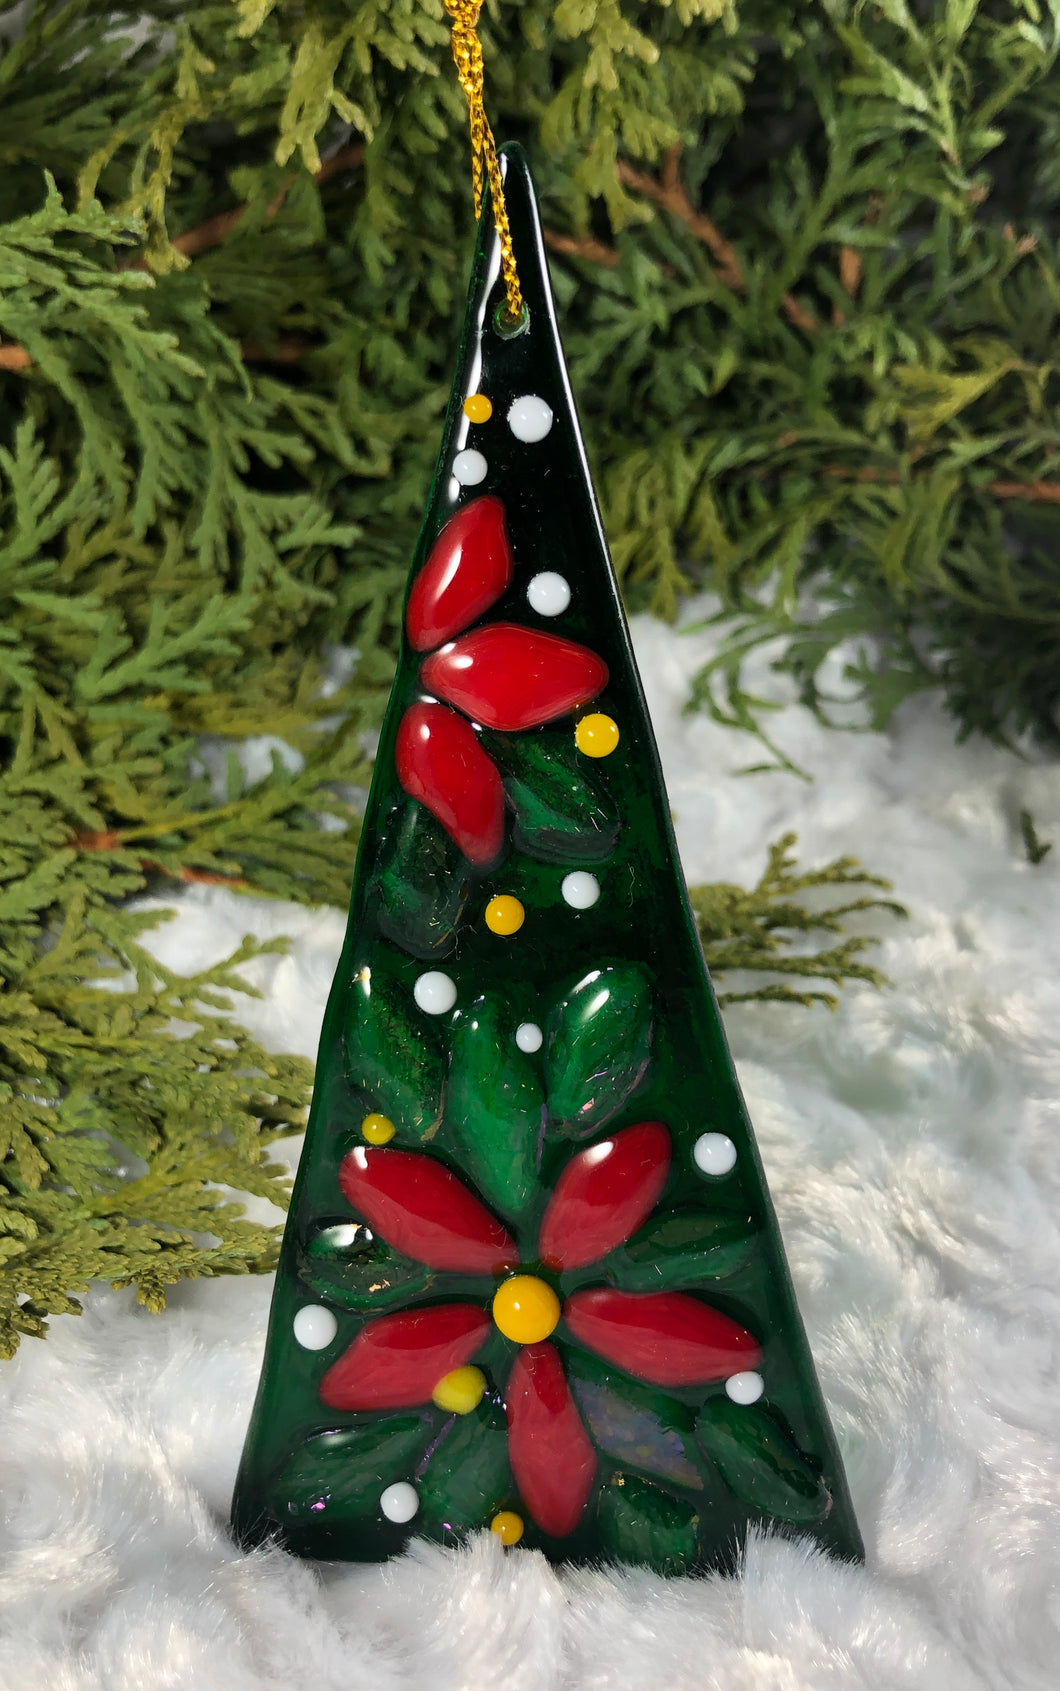 Holiday Ornaments - Poinsettias on Green Aventurine